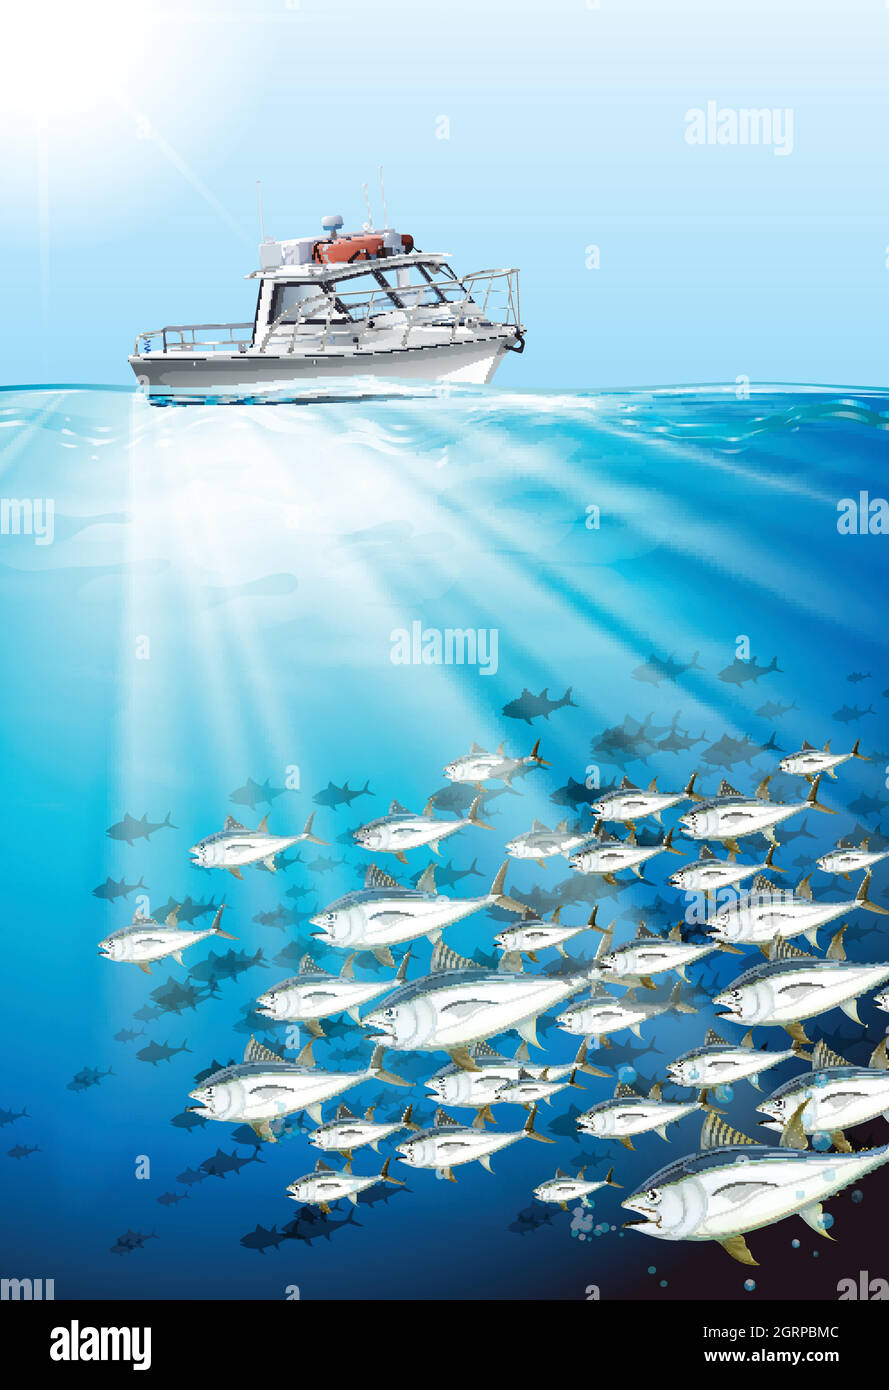 https://c8.alamy.com/comp/2GRPBMC/fishing-boat-and-fish-under-the-sea-2GRPBMC.jpg